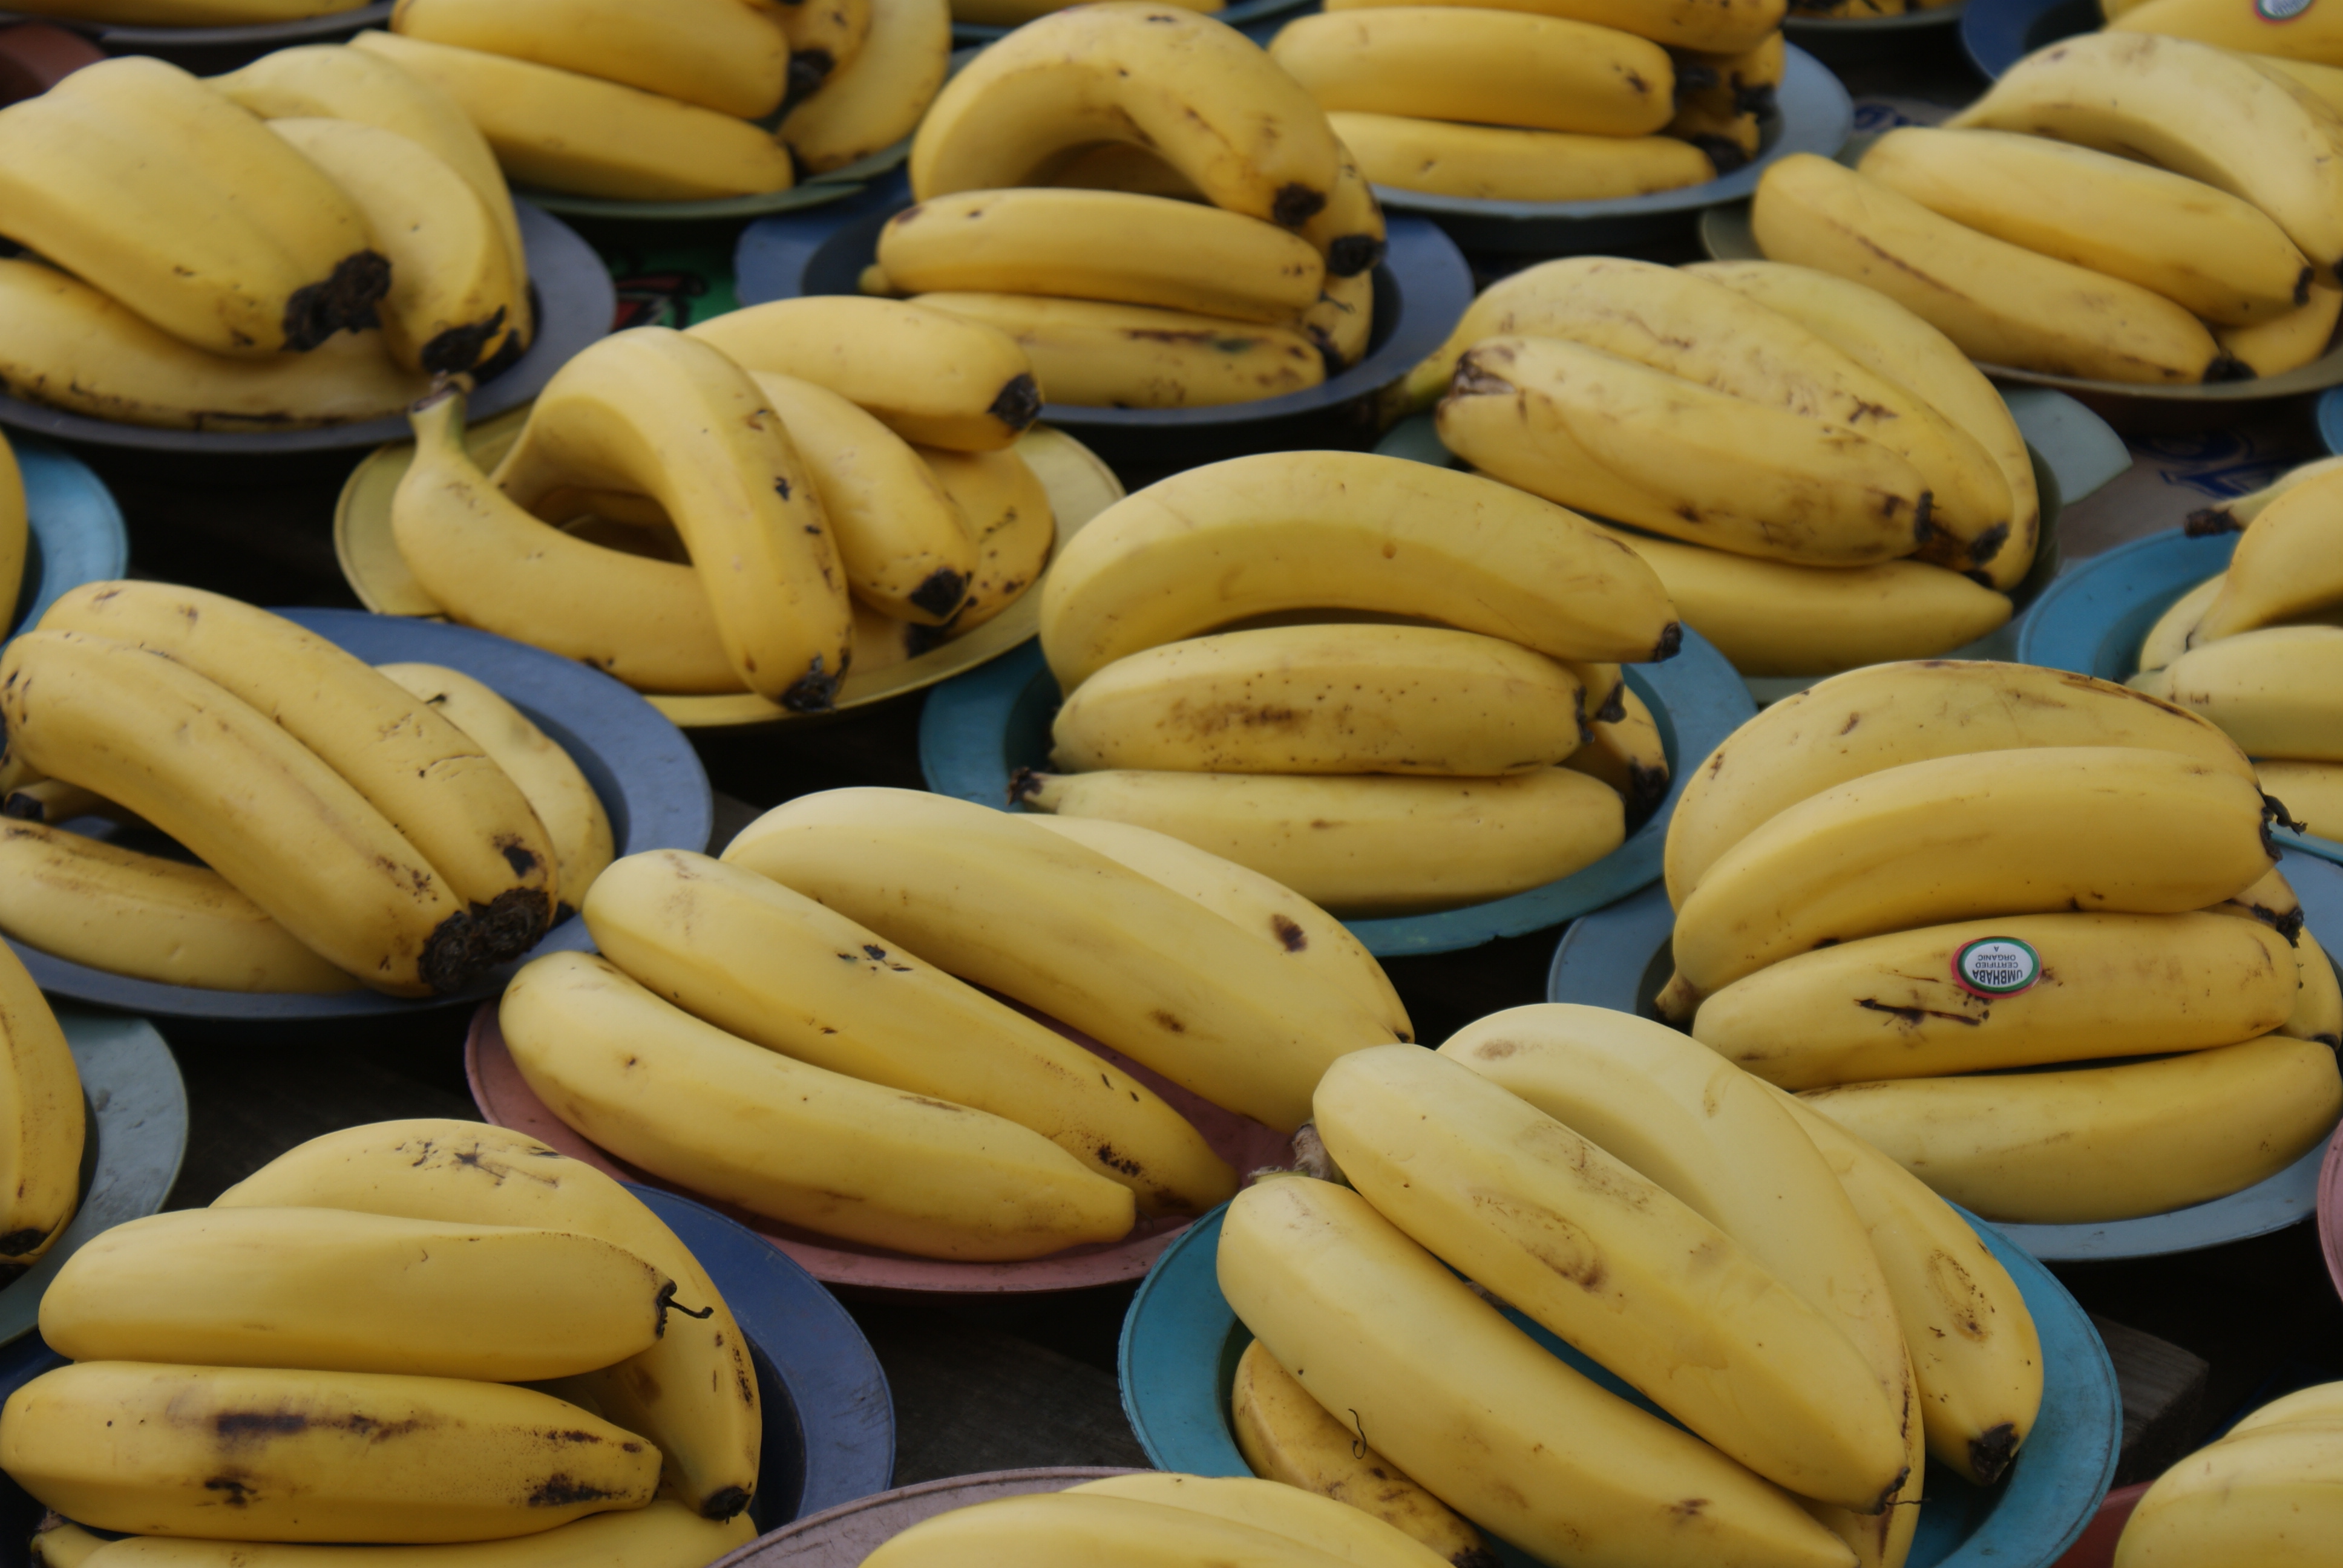 Global shortages in banana market - AgriOrbit